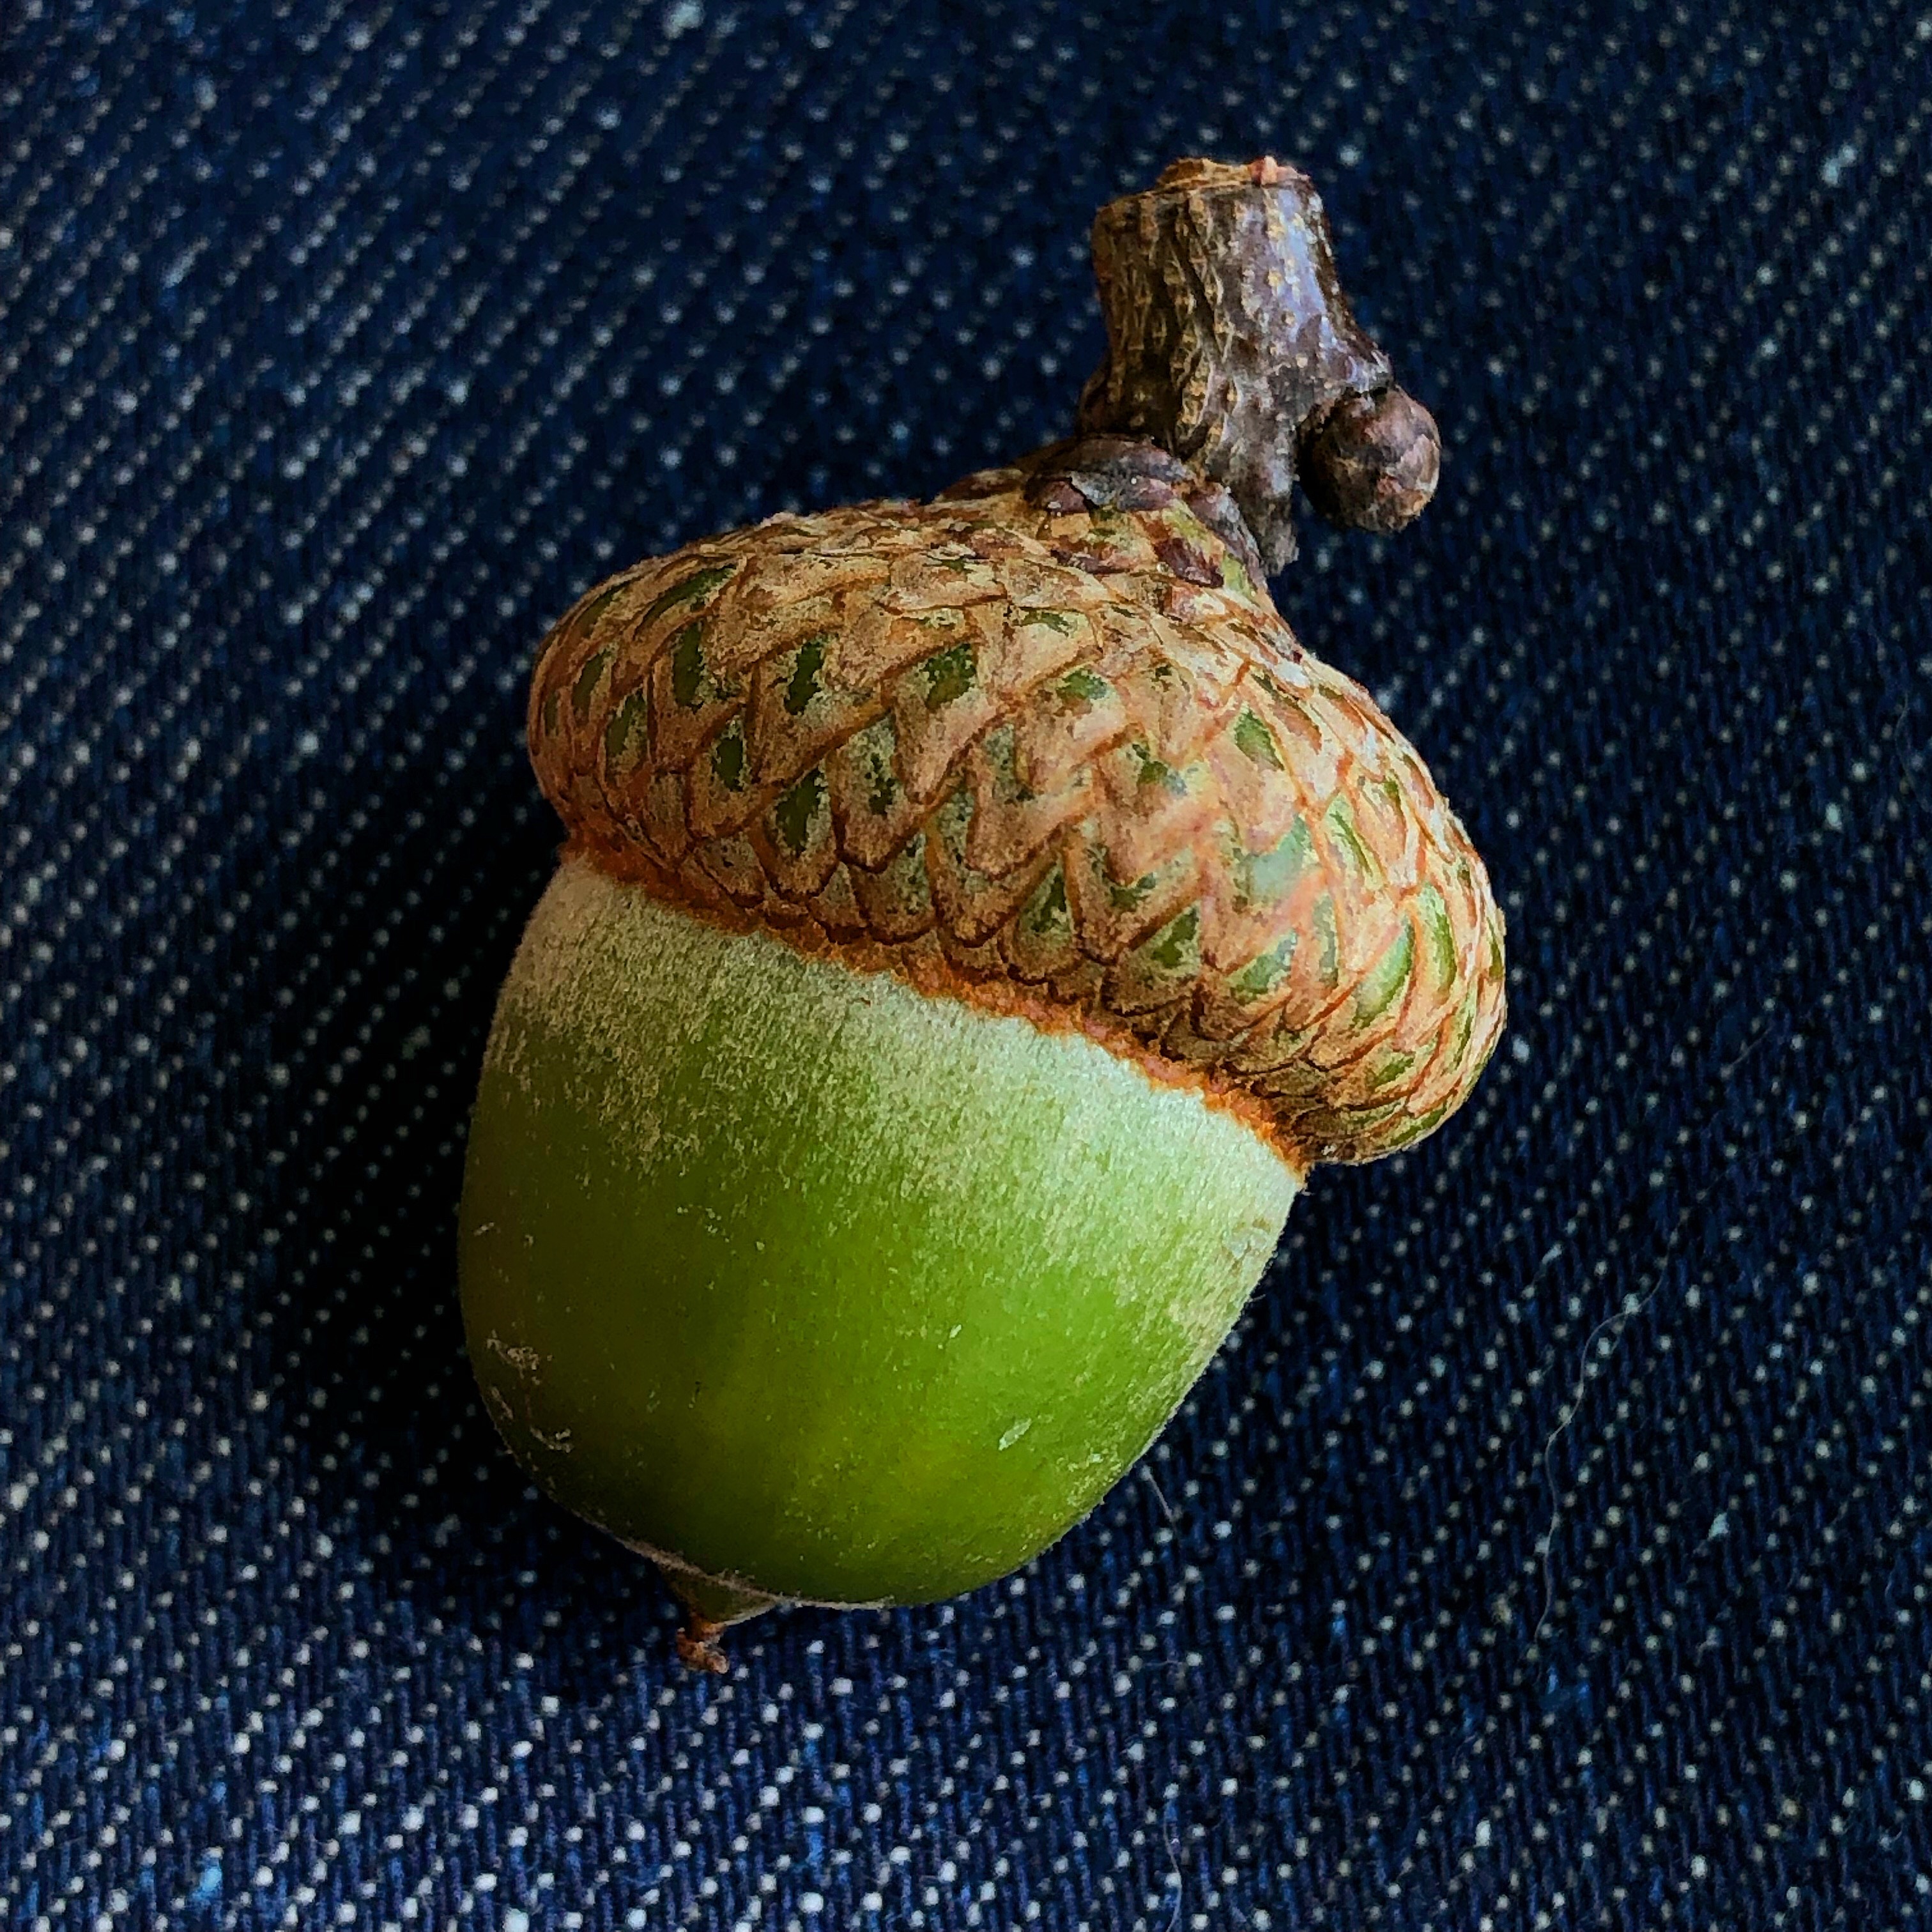 The acorn